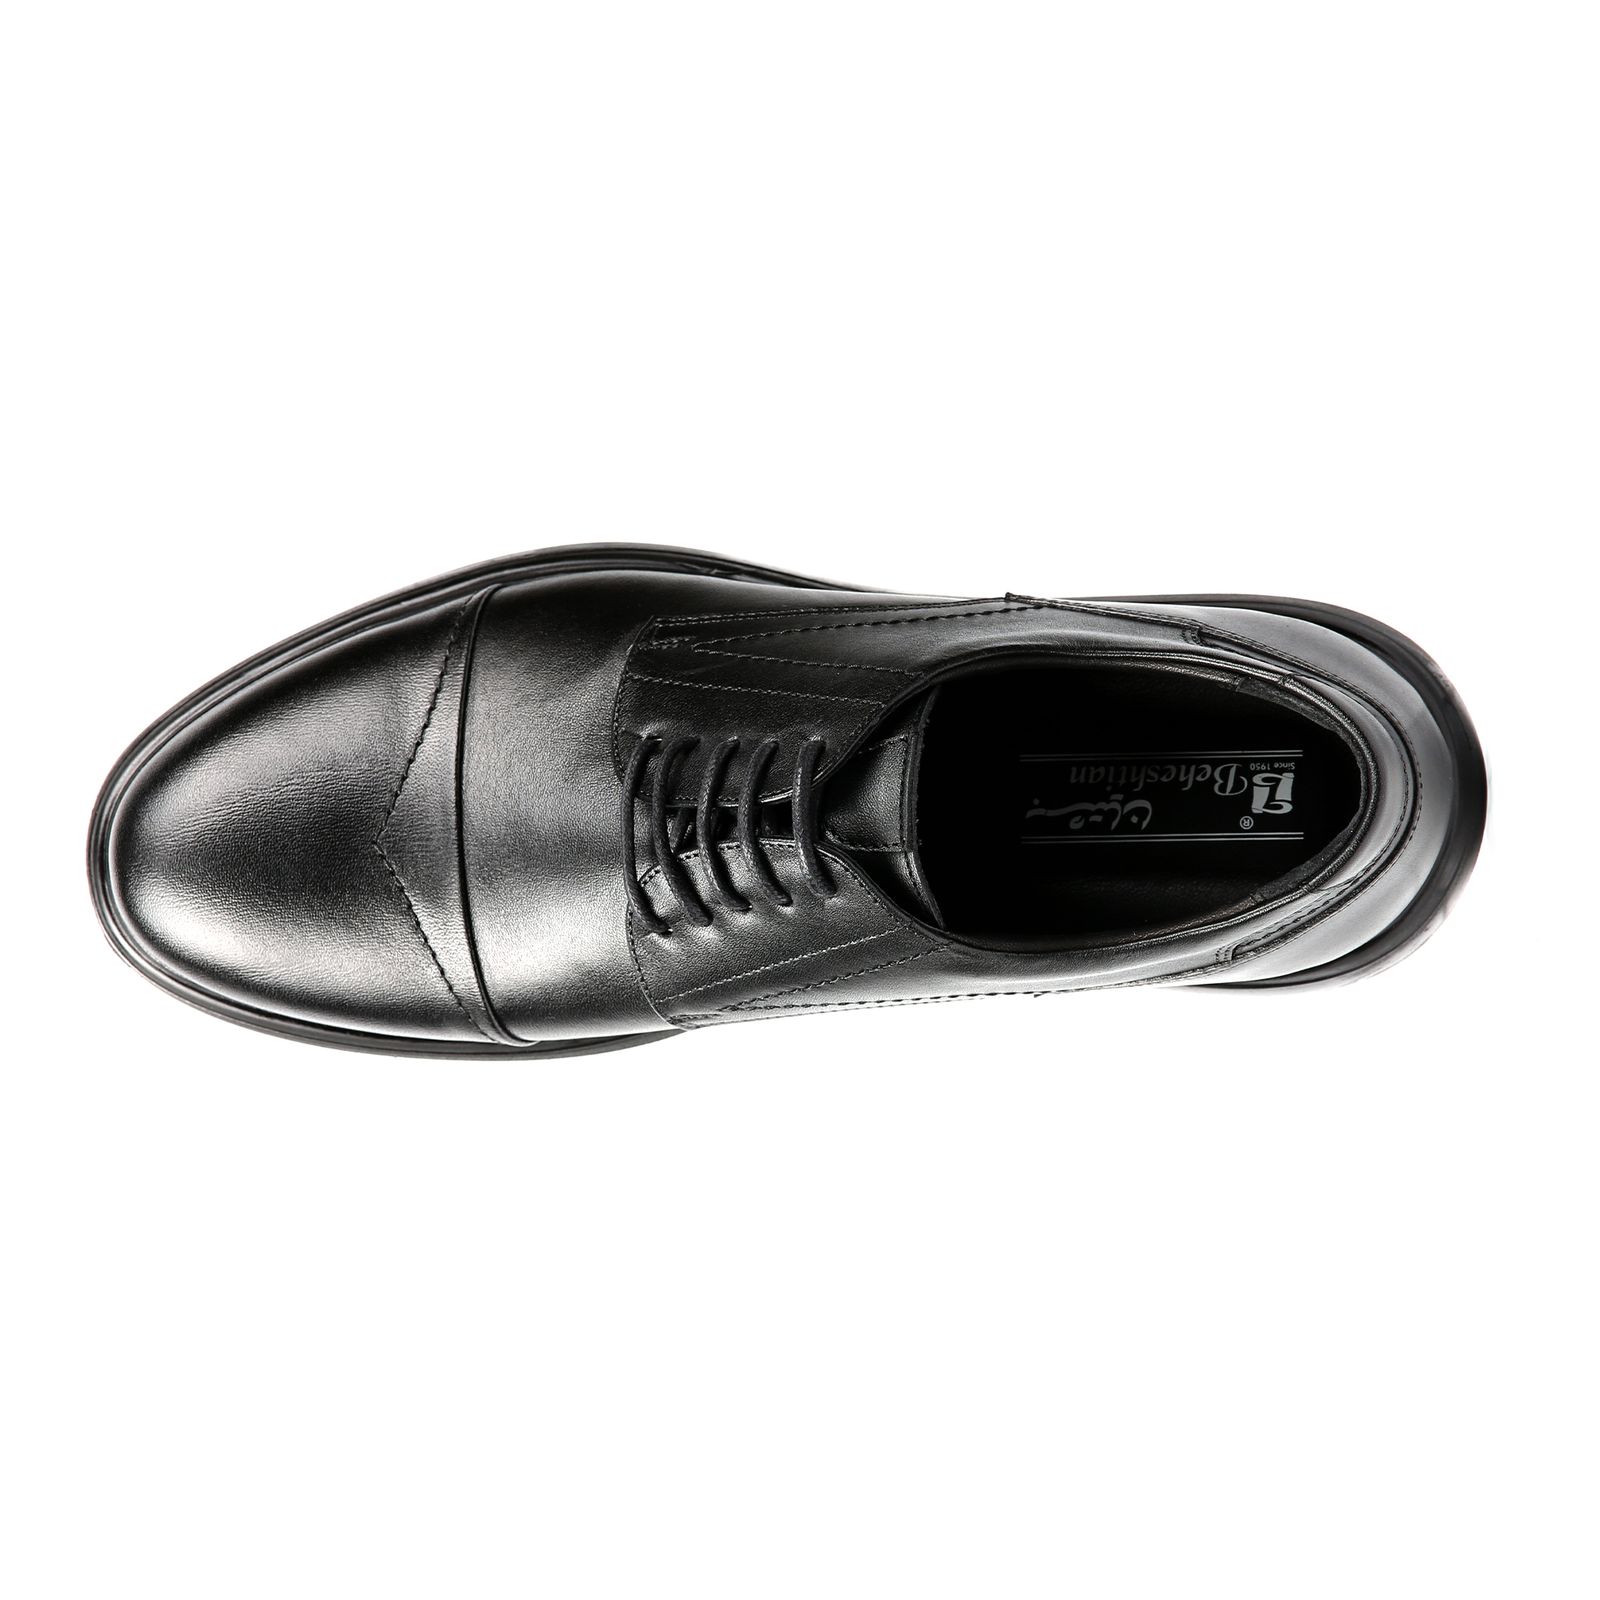 کفش روزمره مردانه بهشتیان مدل چیاکو 23210 -  - 4